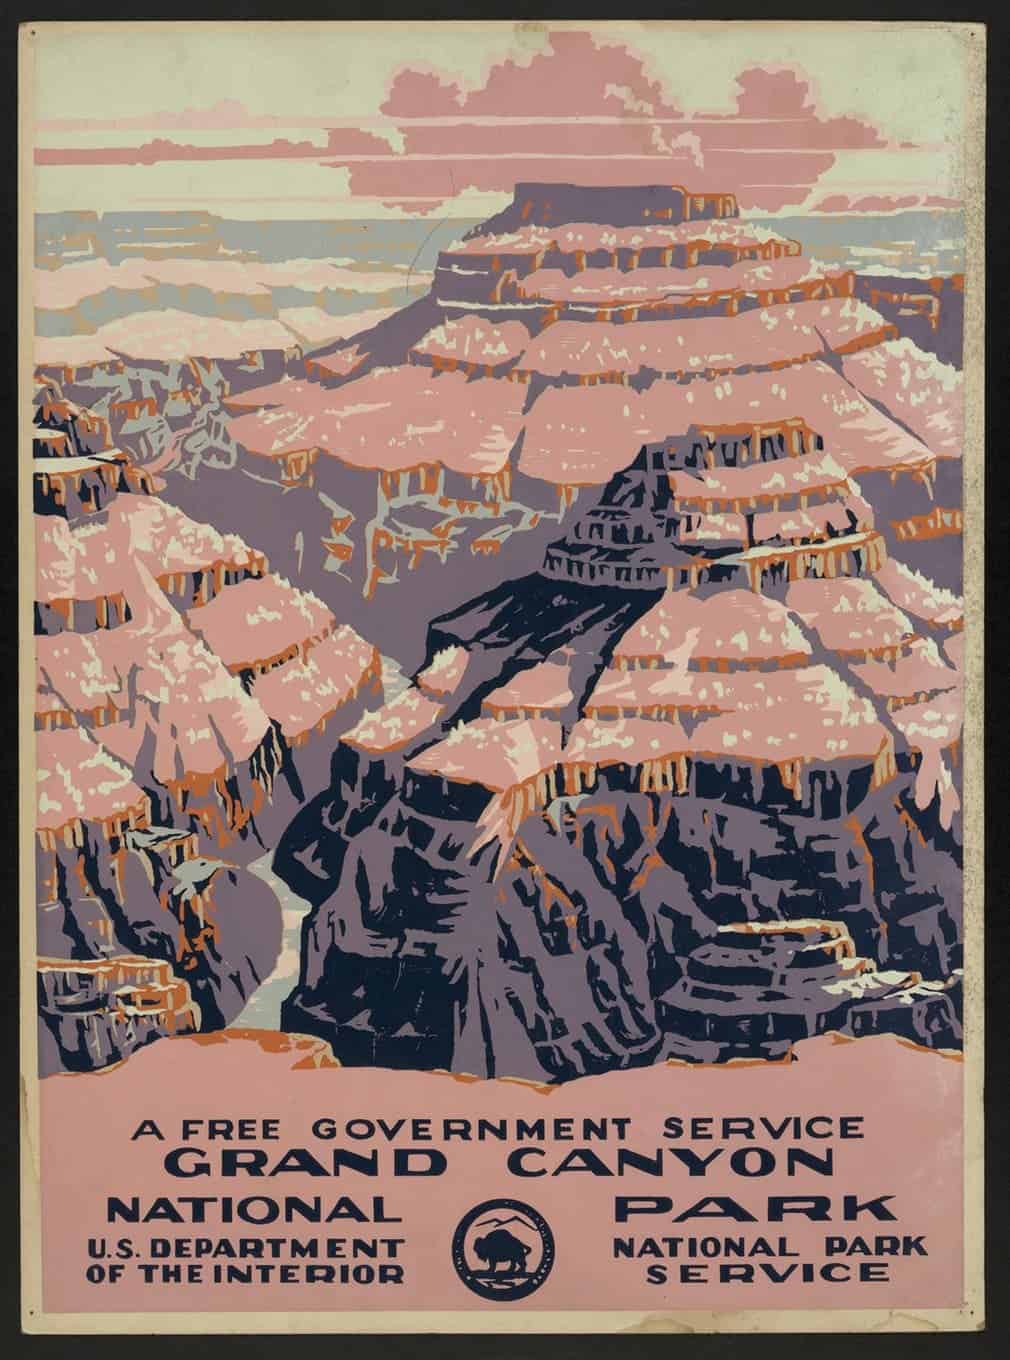 Grand Canyon national park poster, National Park Service, circa 1938